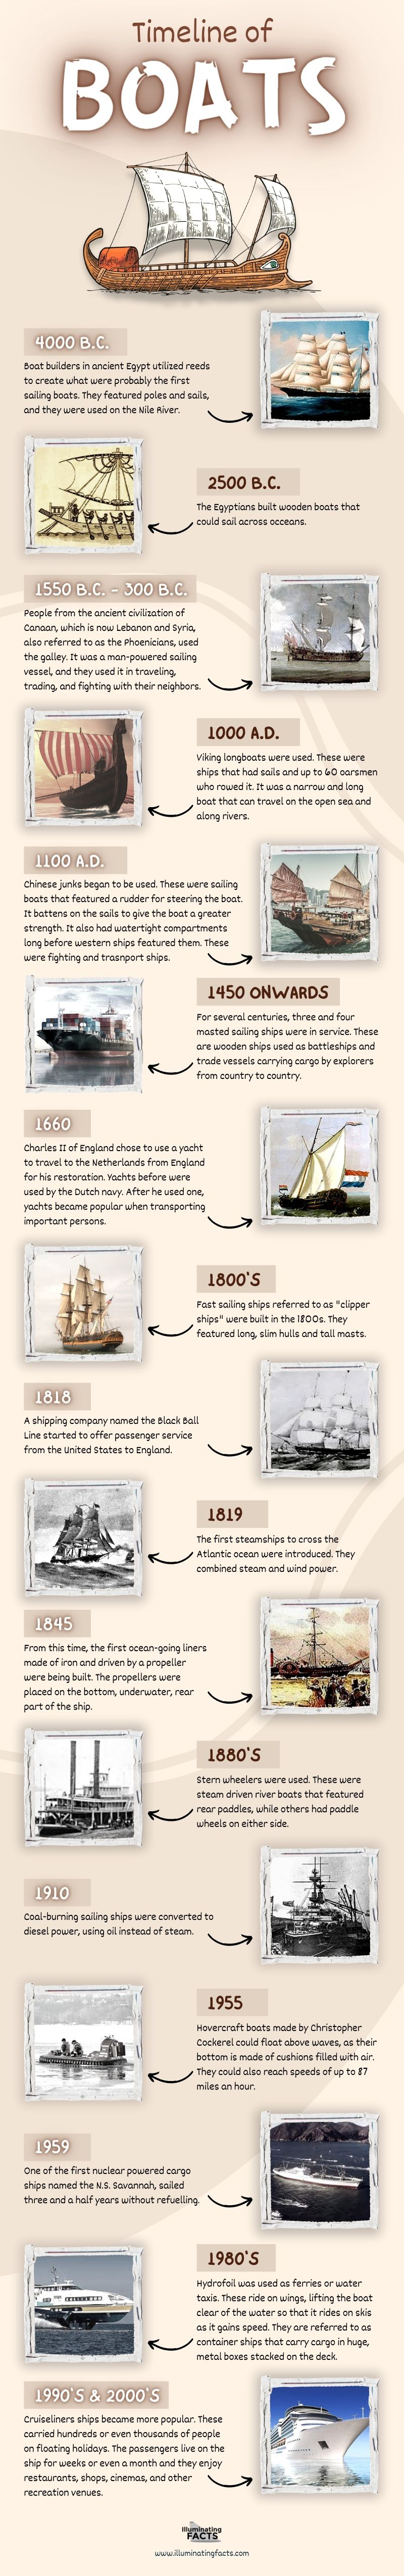 Timeline of Boats